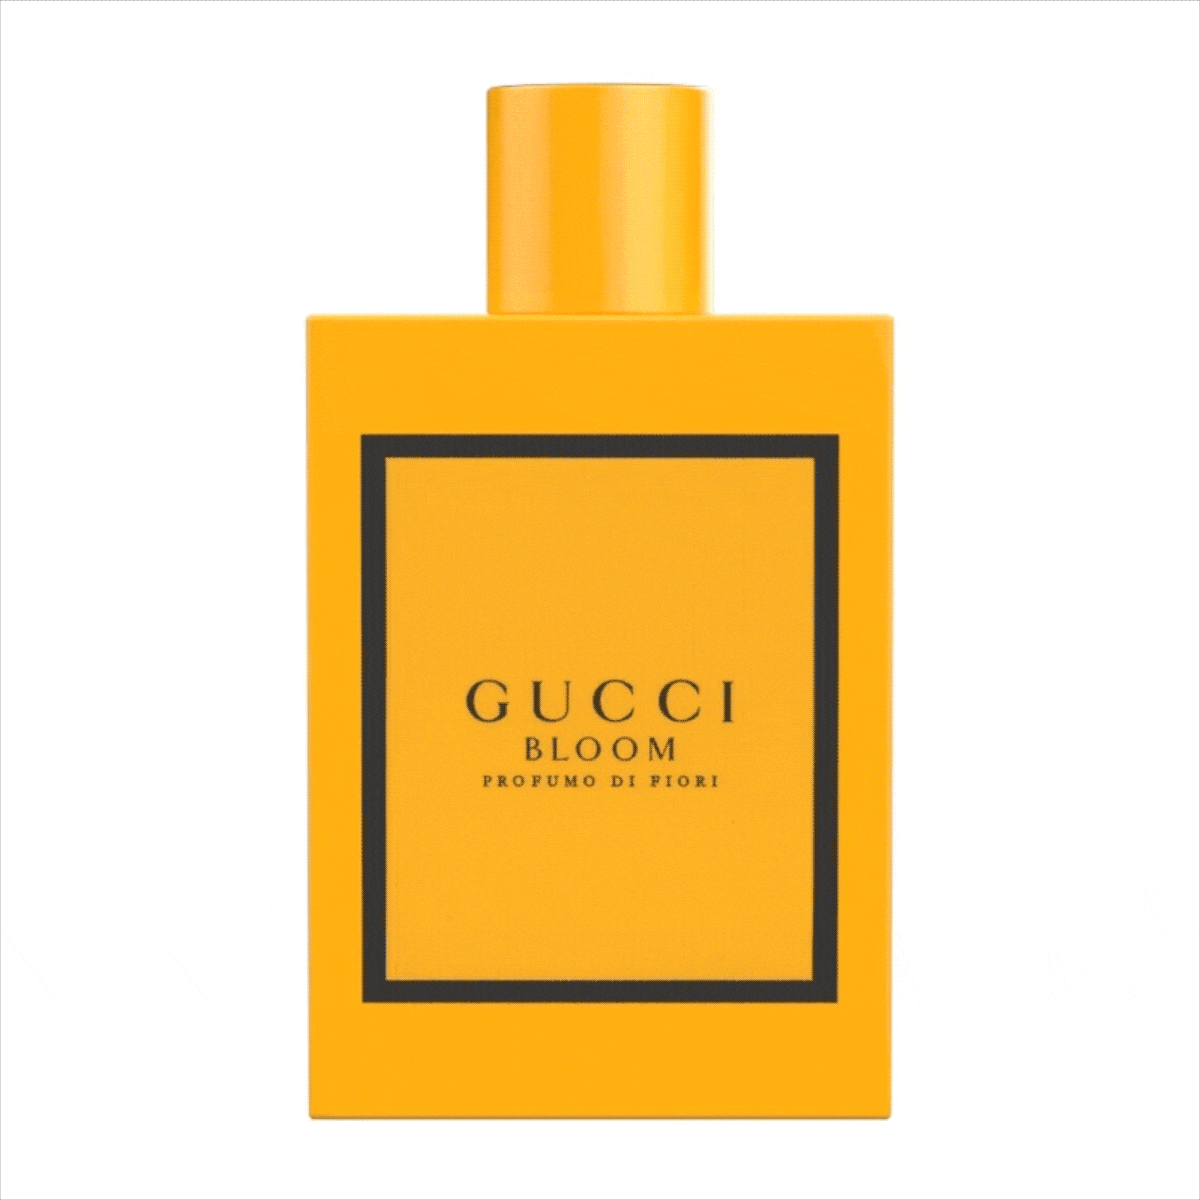 Shop Gucci Bloom Profumo di Fiori For Her Eau de Parfum by Gucci Online